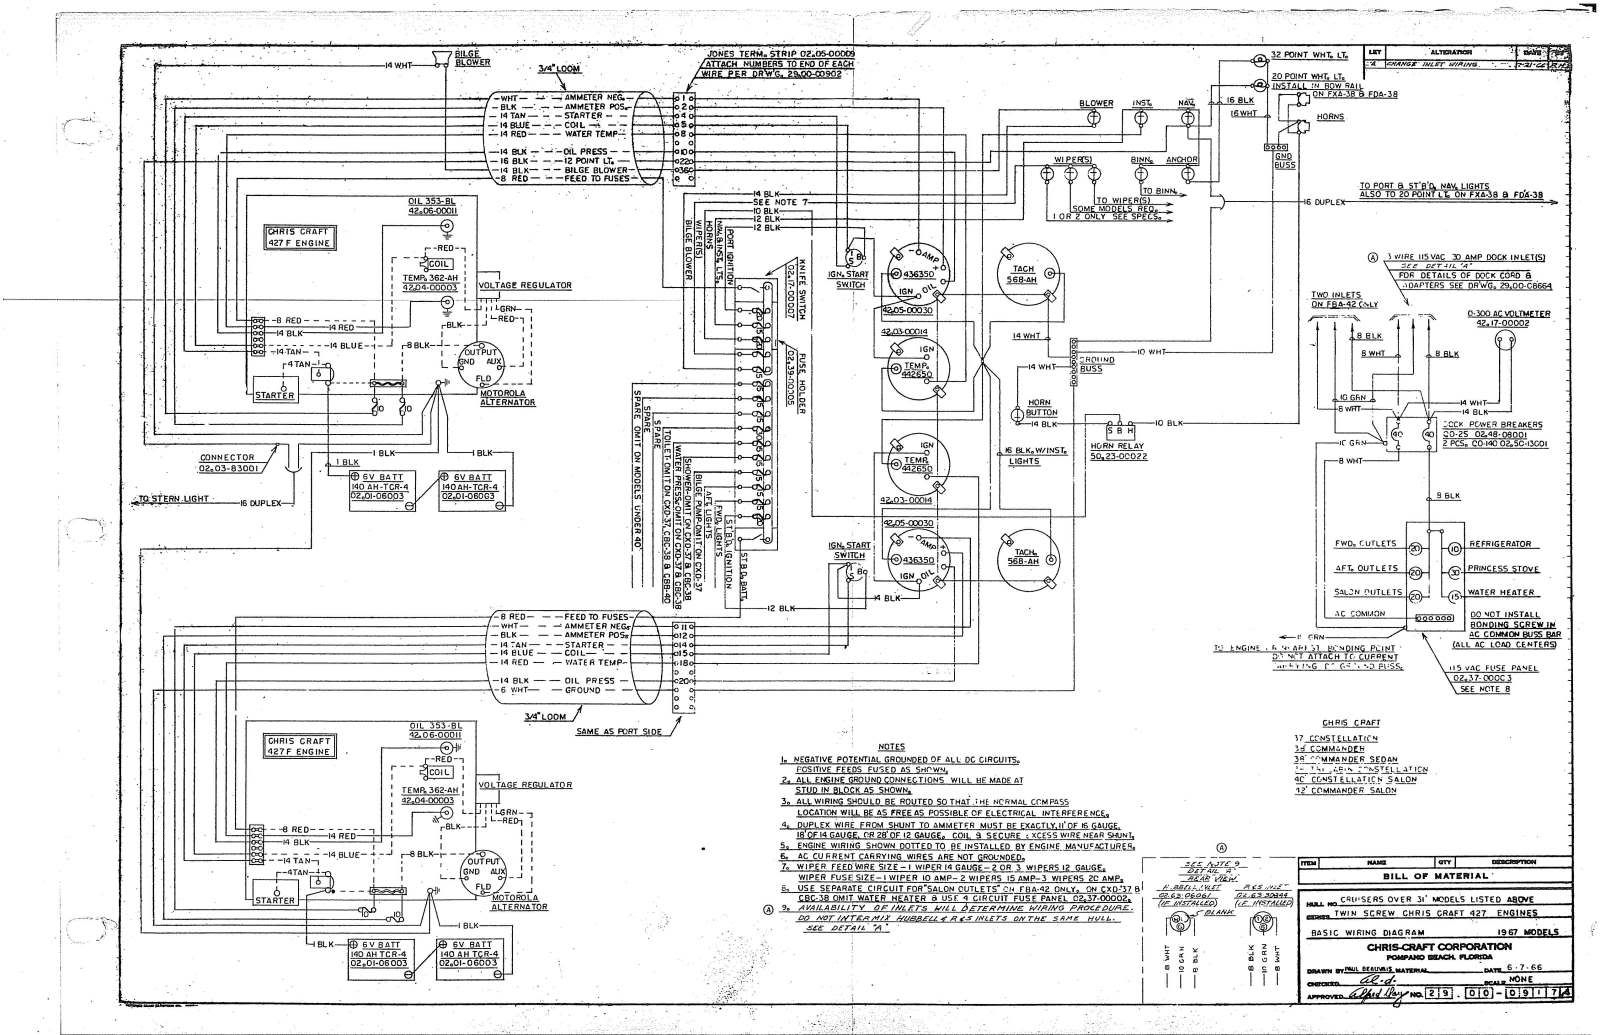 Diagram] Power Commander 3 Usb Wiring Diagram Full Version with regard to Er 5 Wiring Diagram